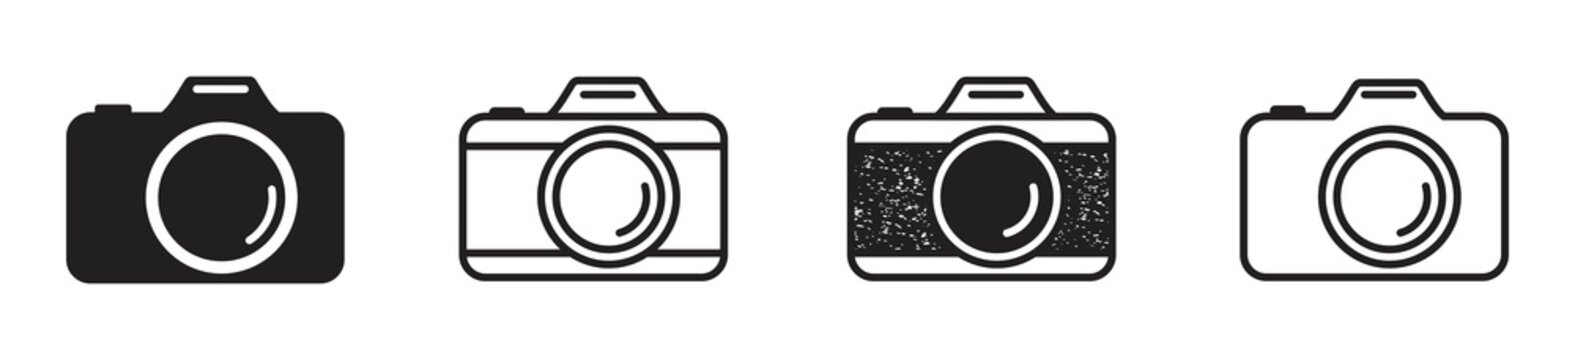 Camera icon set. Photo camera icon in different style. Vector illustration